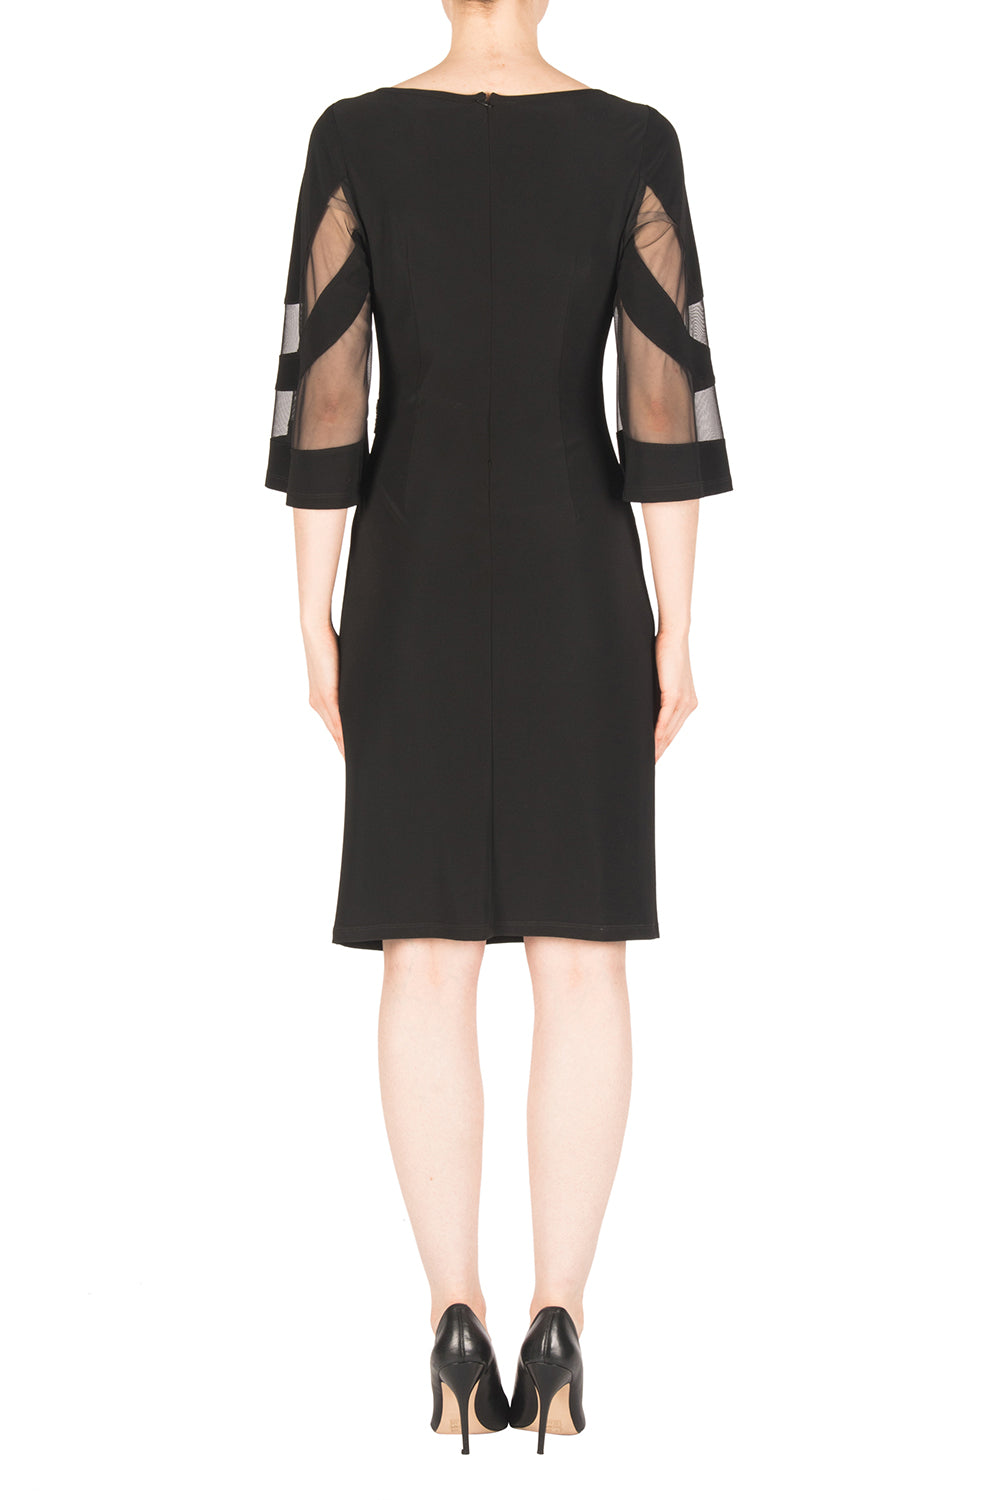 Joseph Ribkoff Black Dress Style 183421